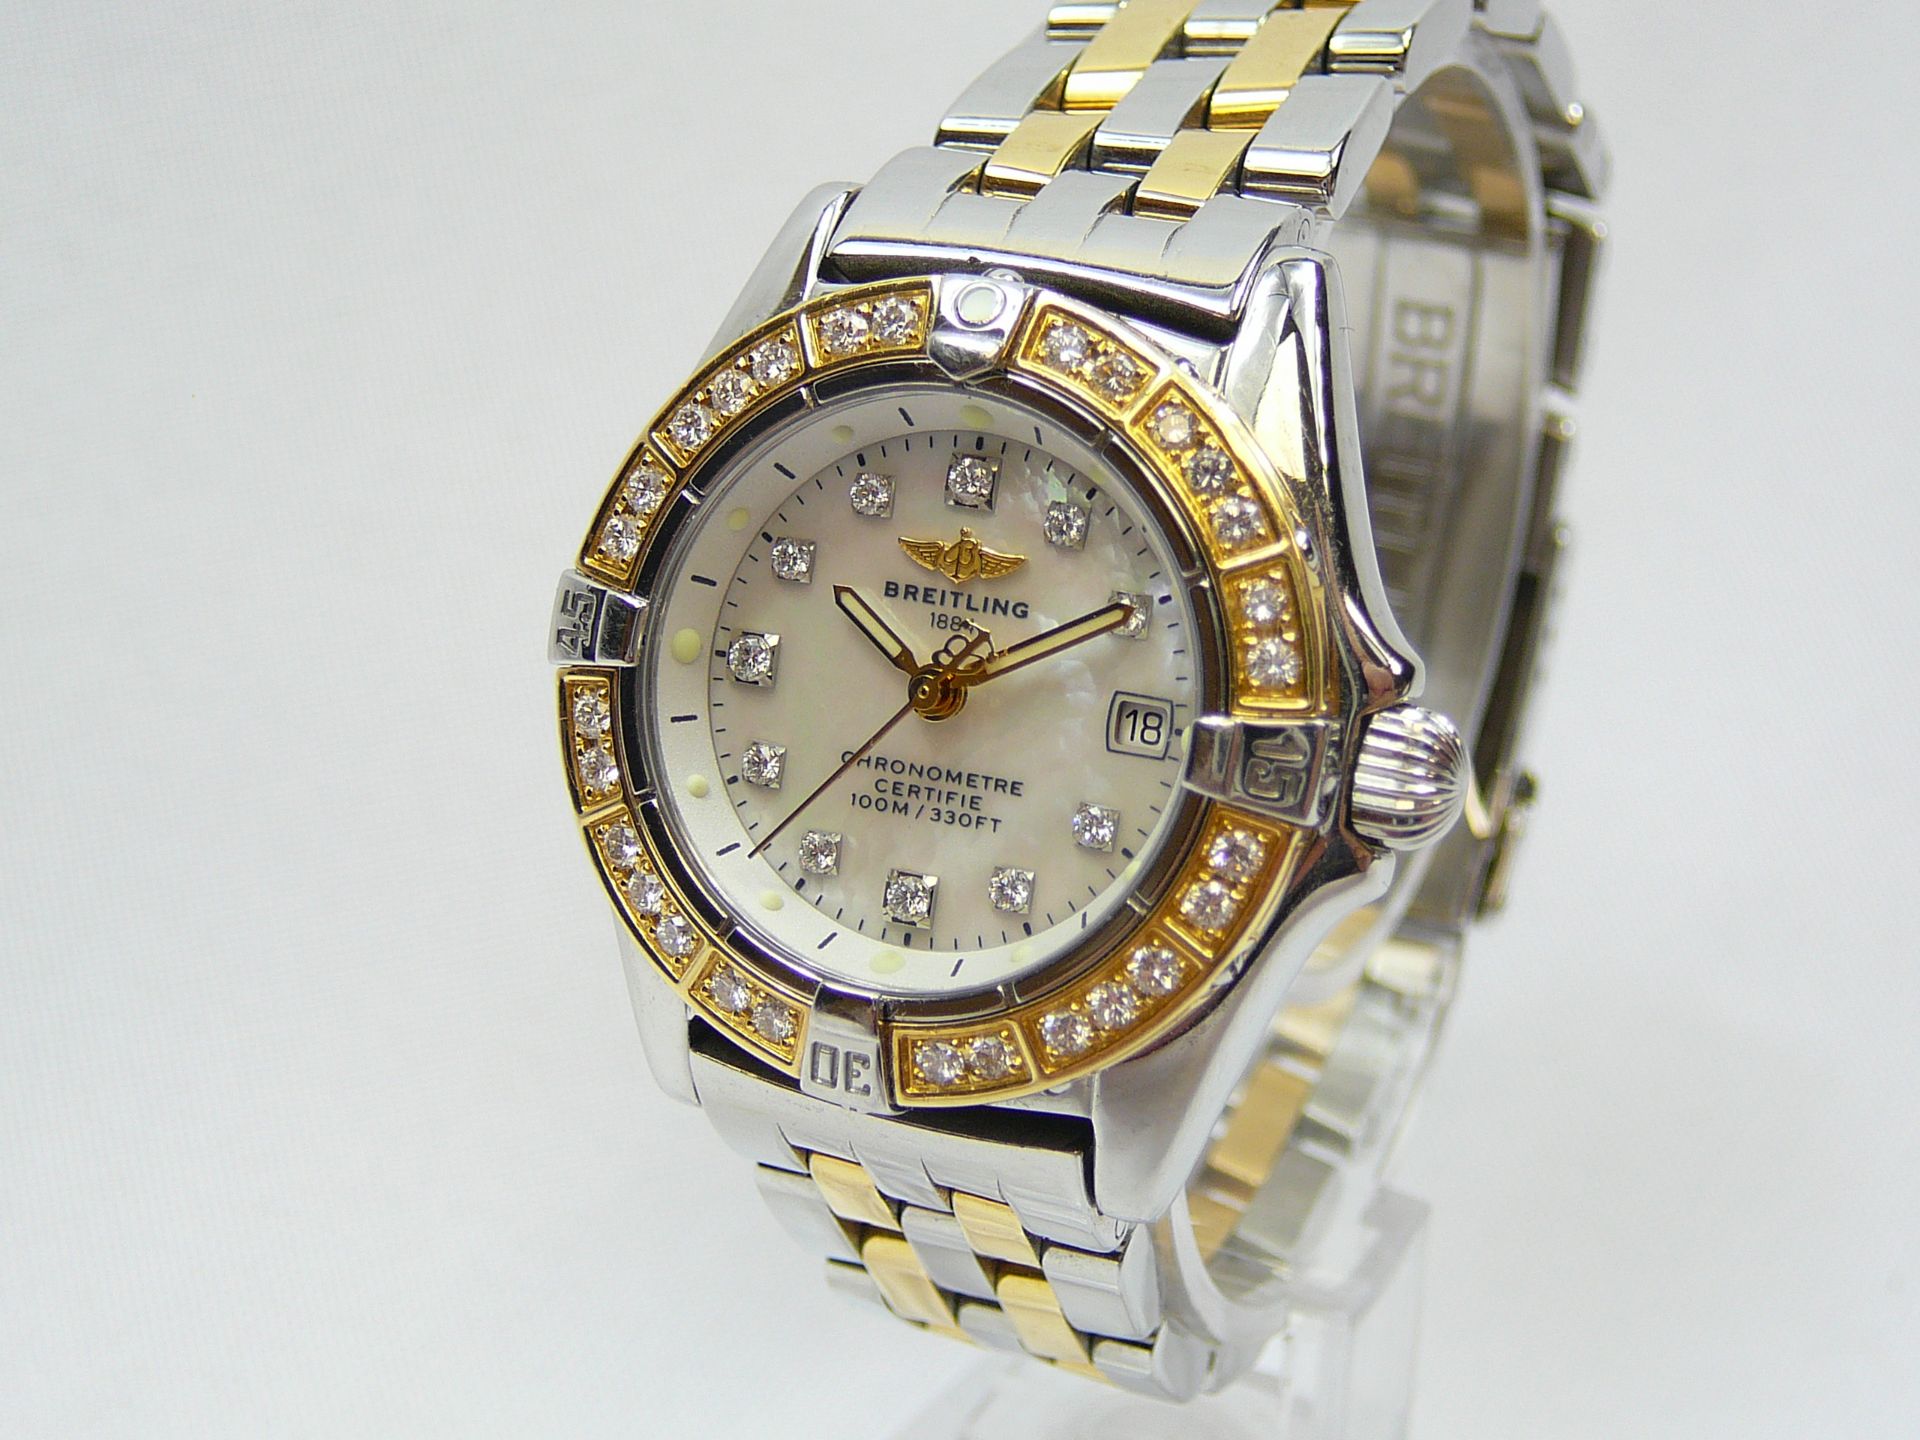 Ladies Breitling Wristwatch - Image 2 of 3